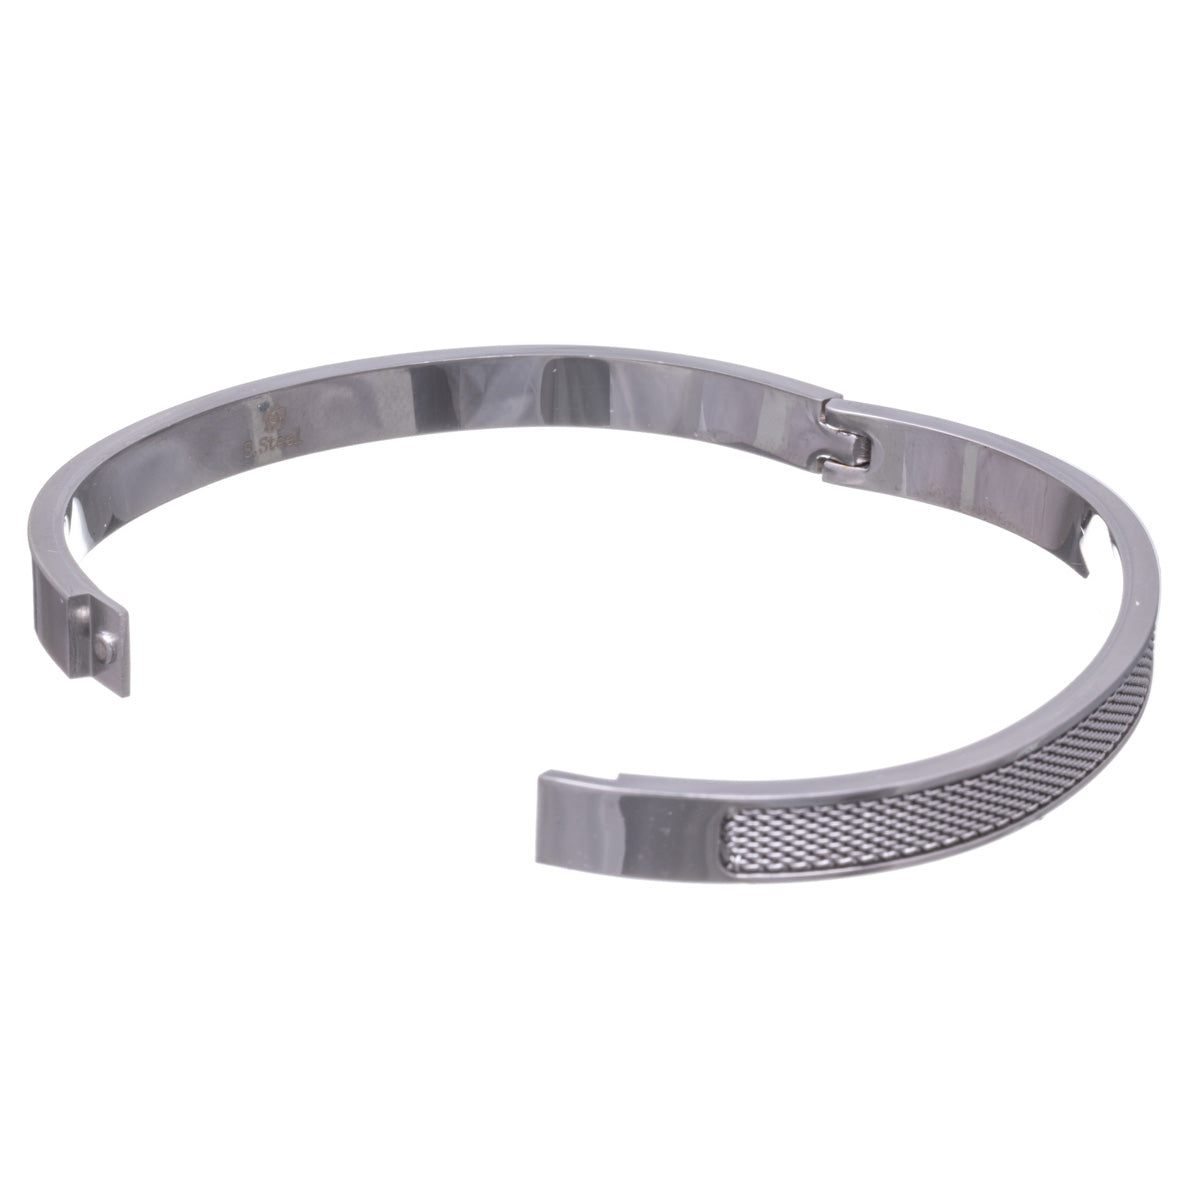 Textured steel bracelet with hinge